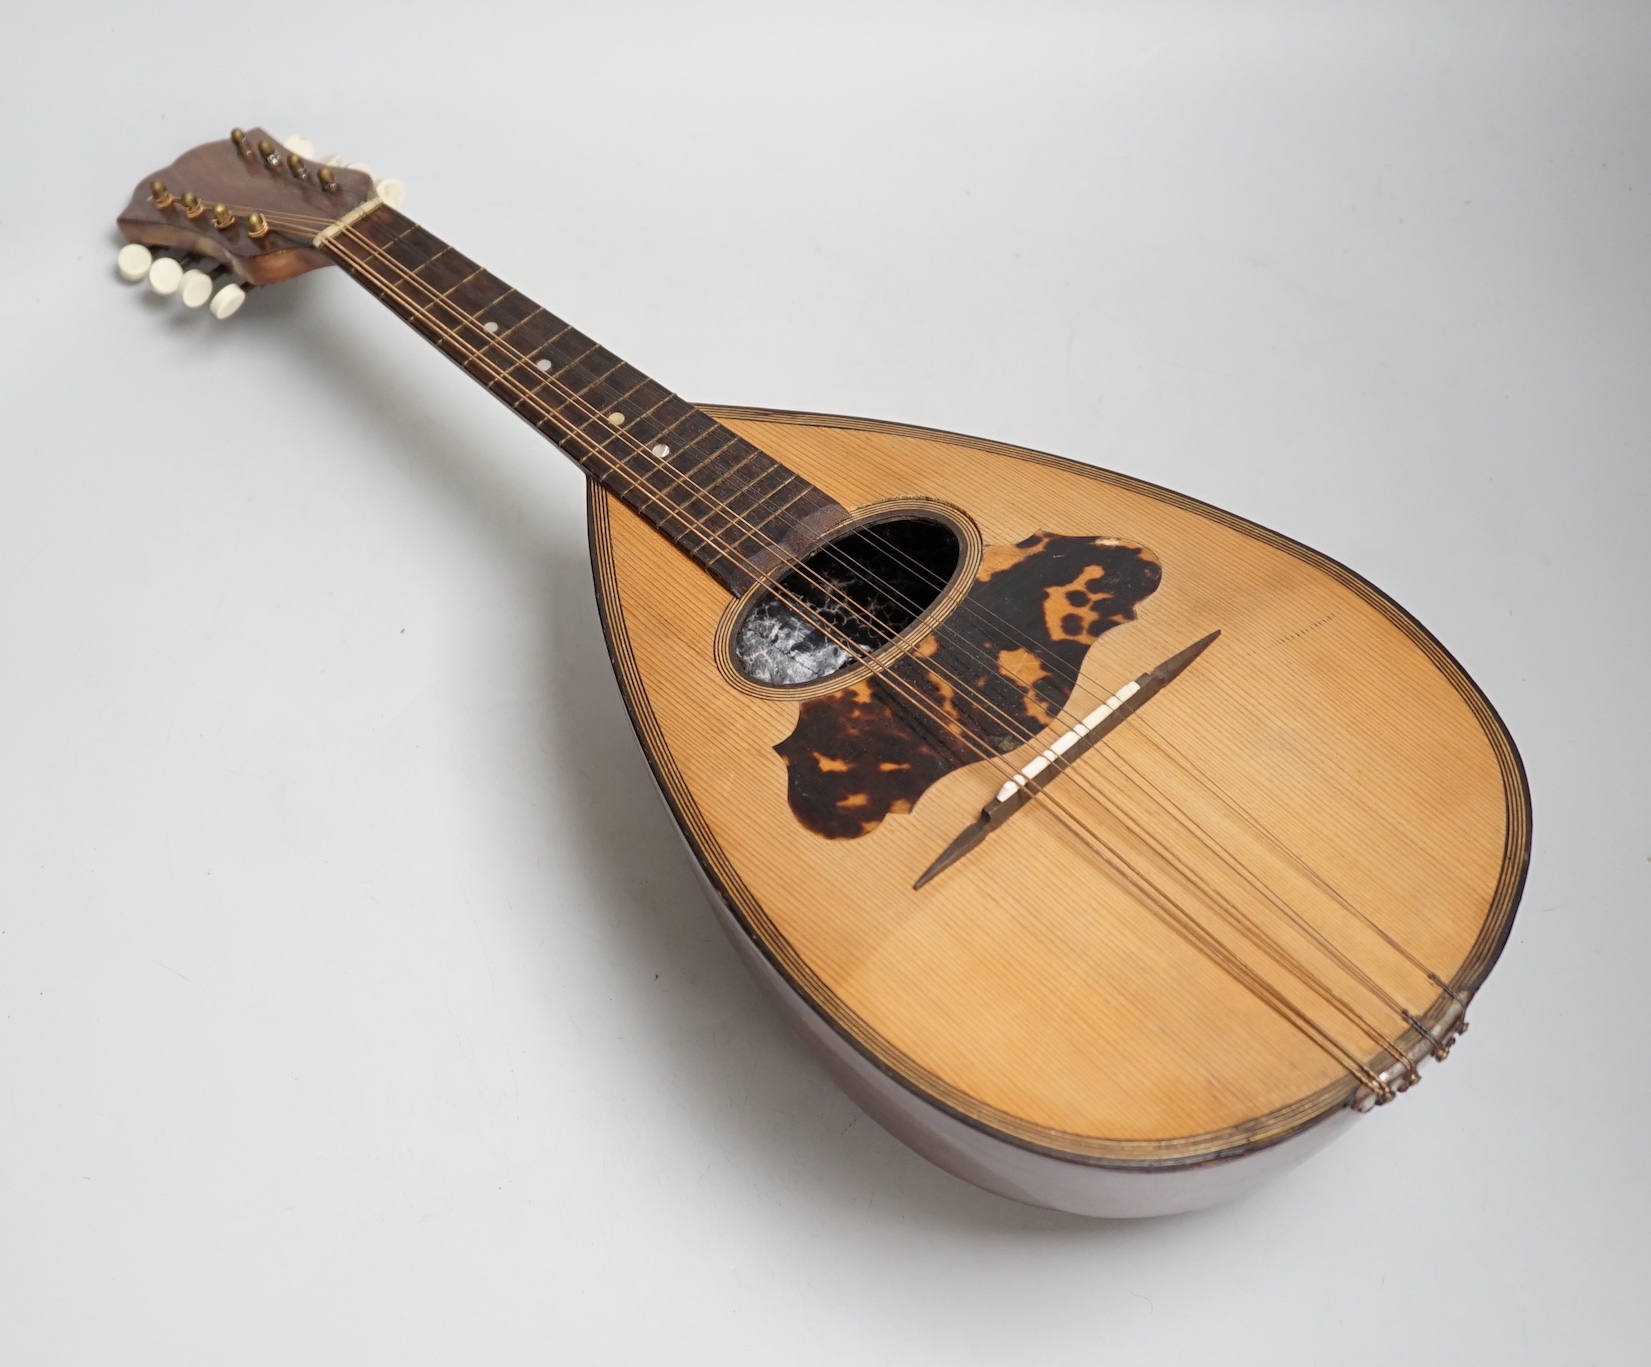 A cased mandolin with tortoiseshell detail, bone tuning pegs, 61cm long